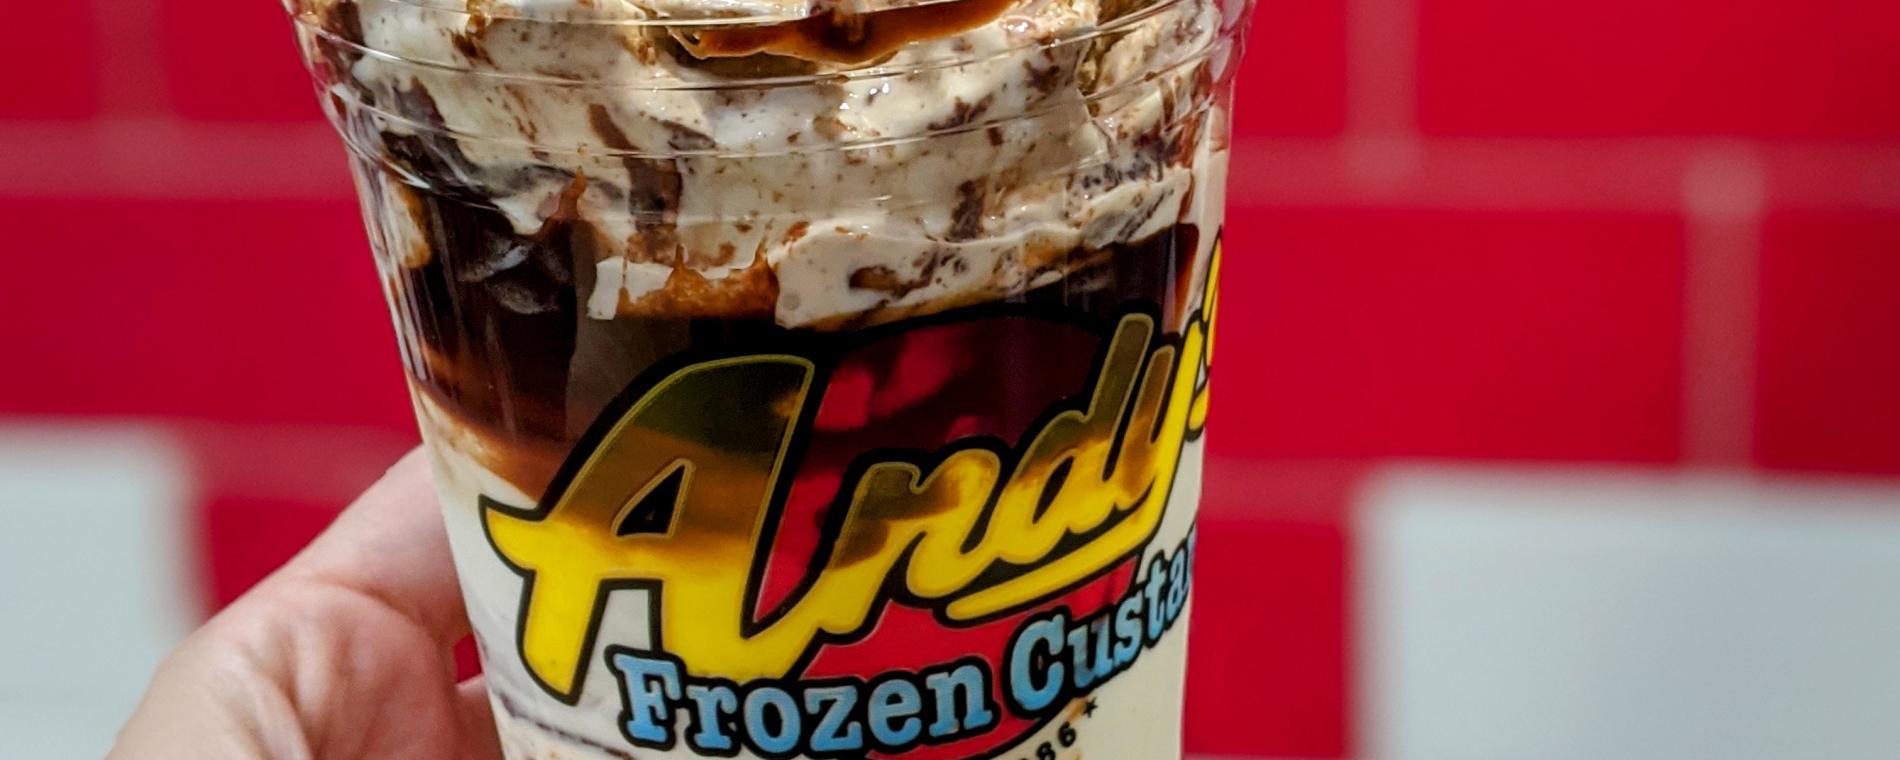 Andy's Frozen Custard partner provided Visit Wichita